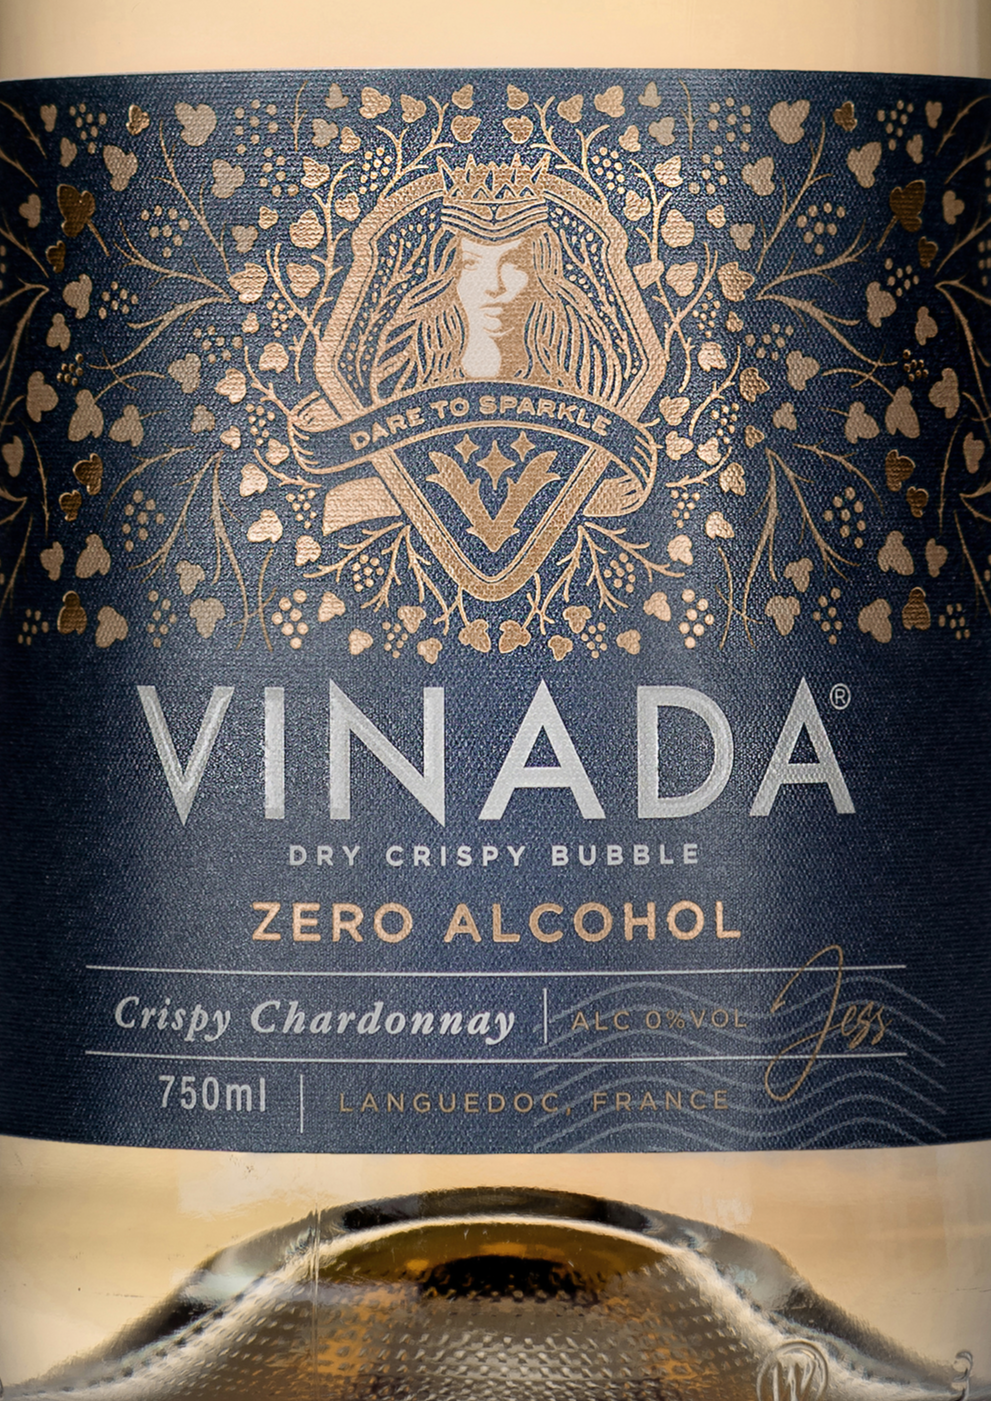 VINADA® - CRISPY CHARDONNAY (0%) 750 ML - 1,3,6,12 Bottles